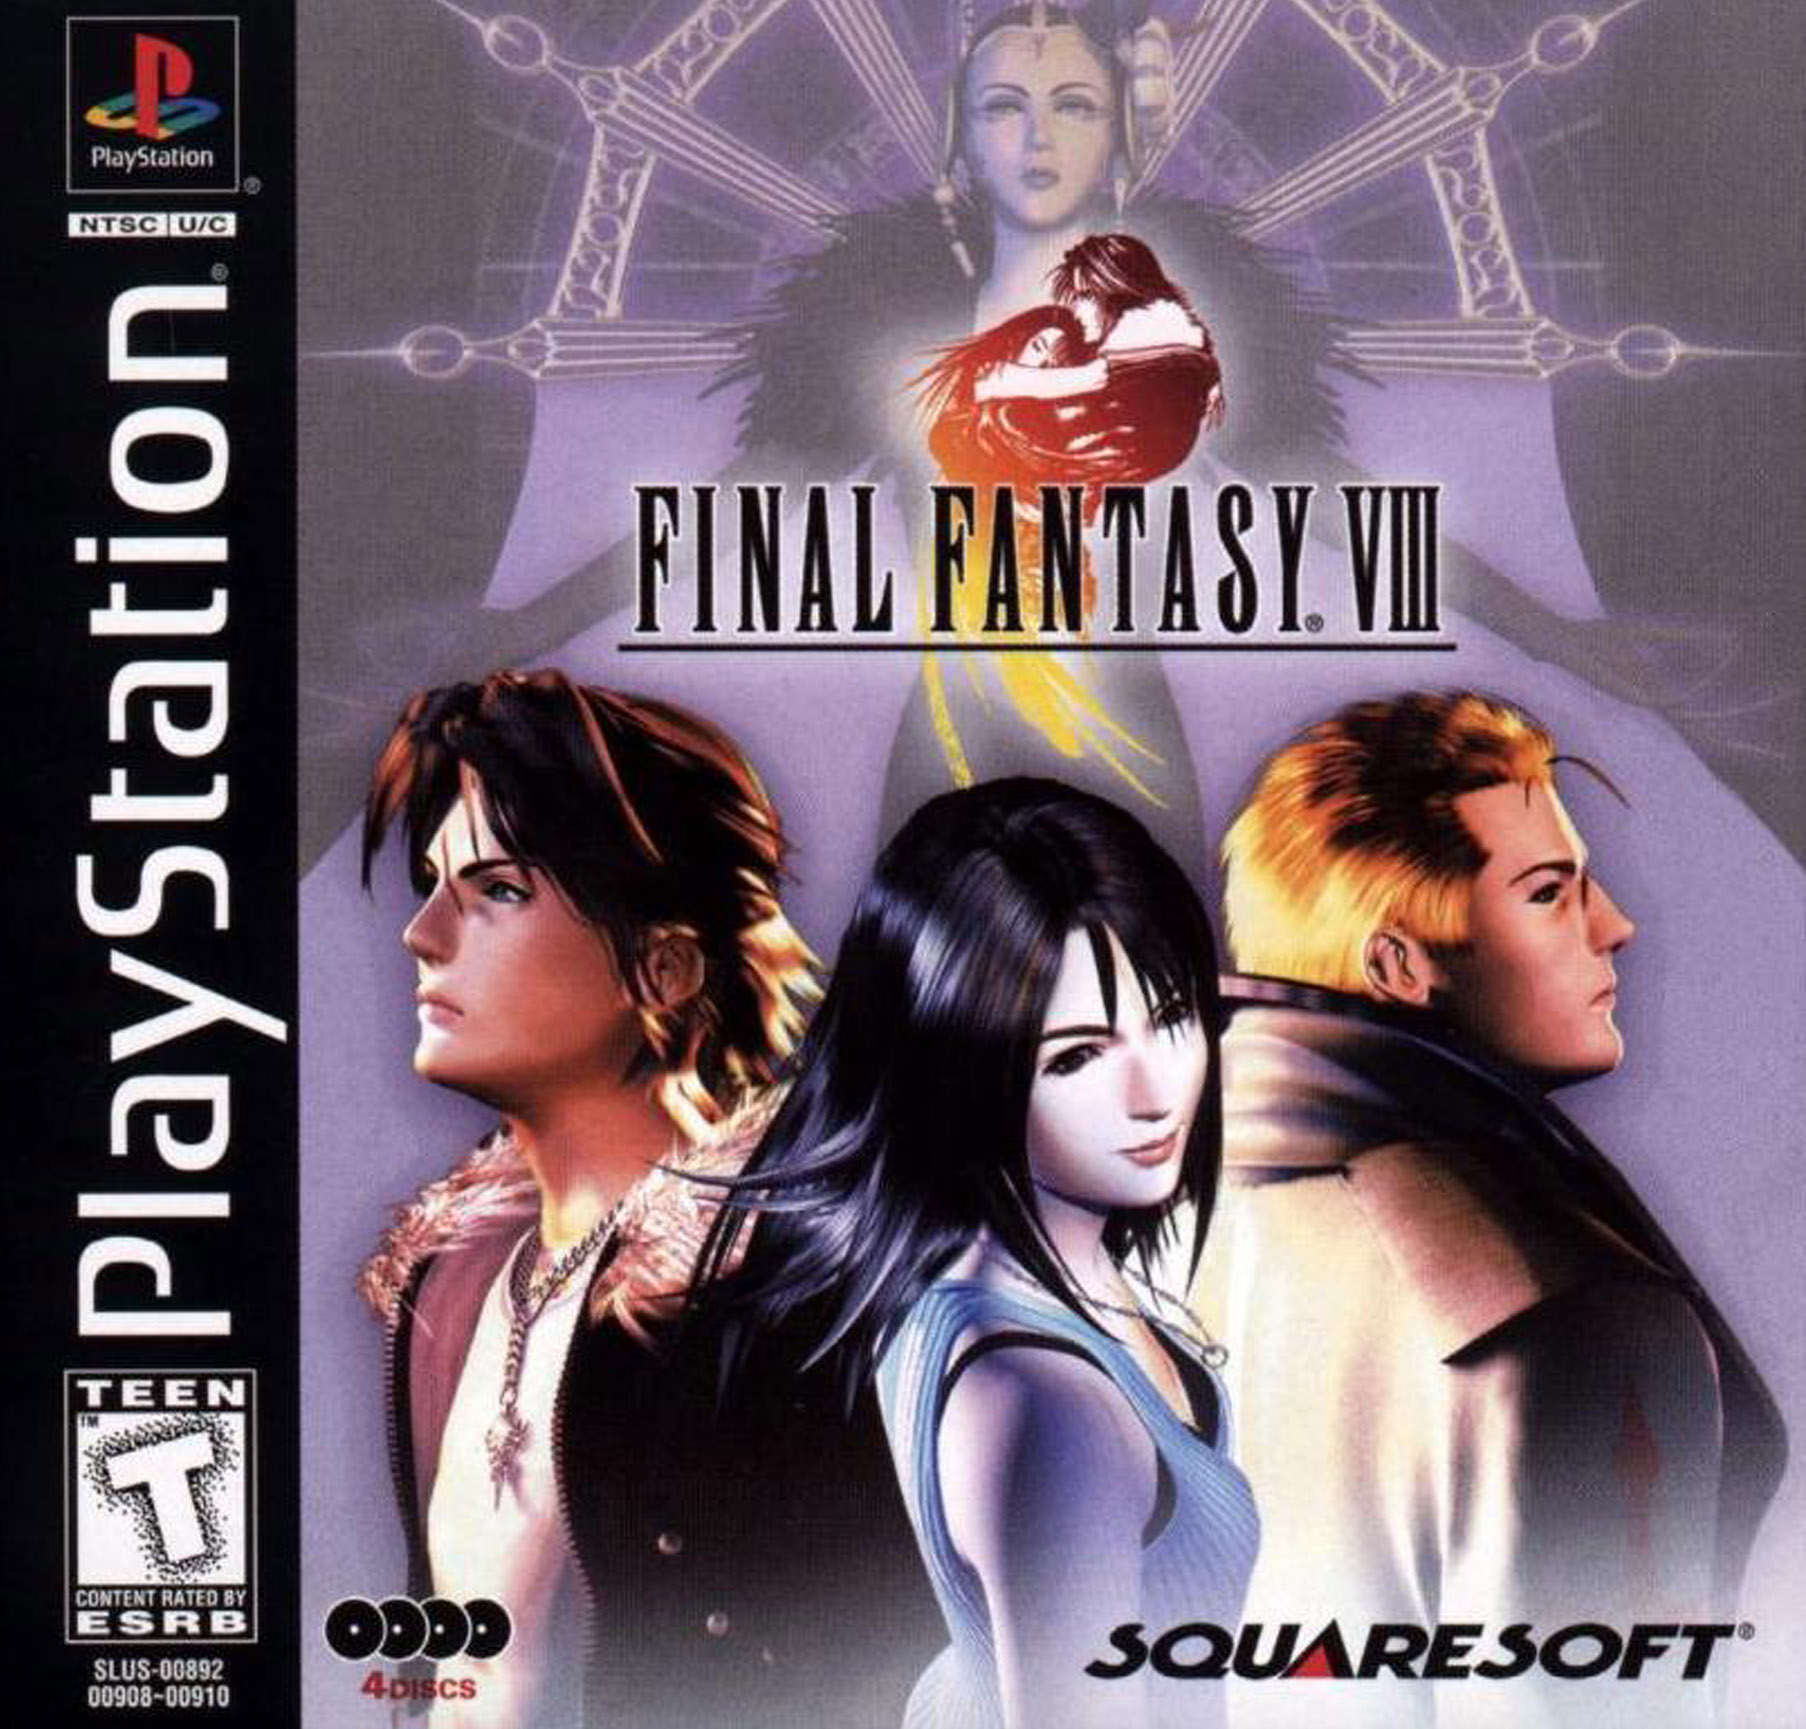 Final Fantasy VIII [U] for psx screenshot